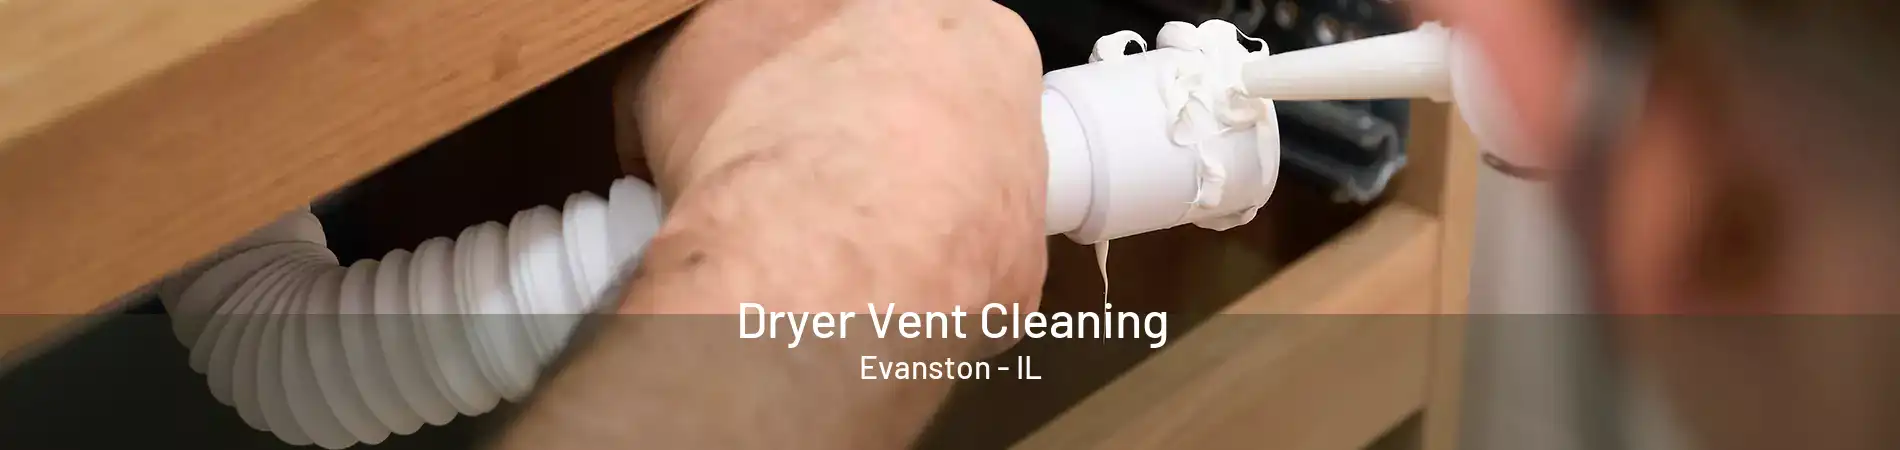 Dryer Vent Cleaning Evanston - IL